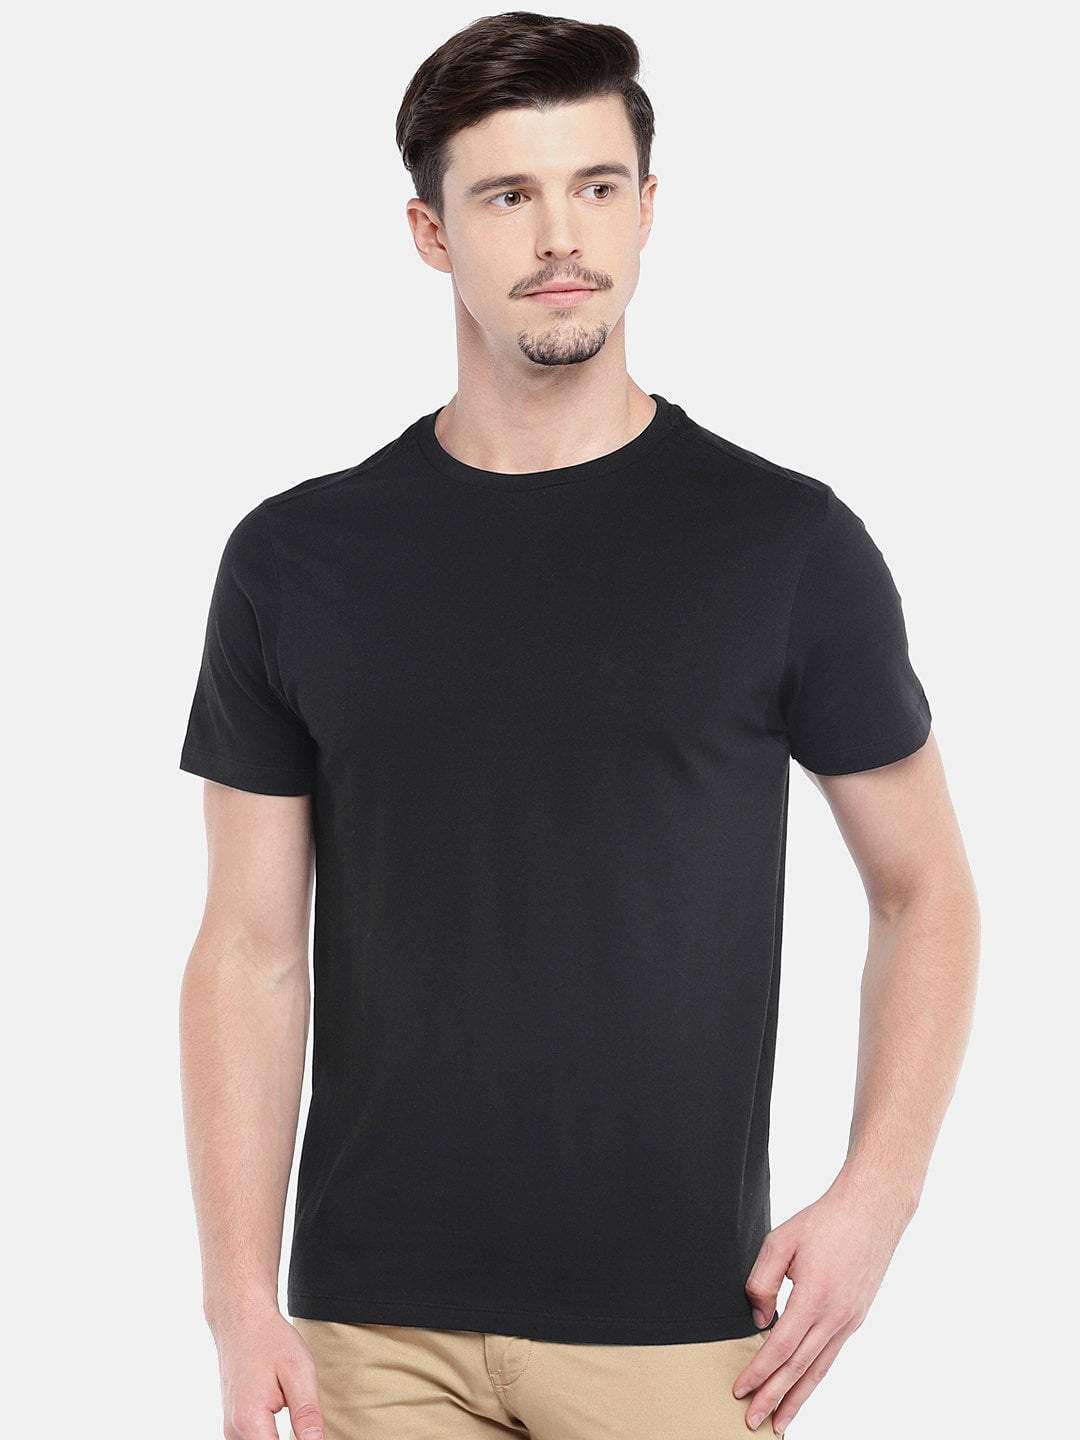 Men's Black Cotton Regular Fit TShirt